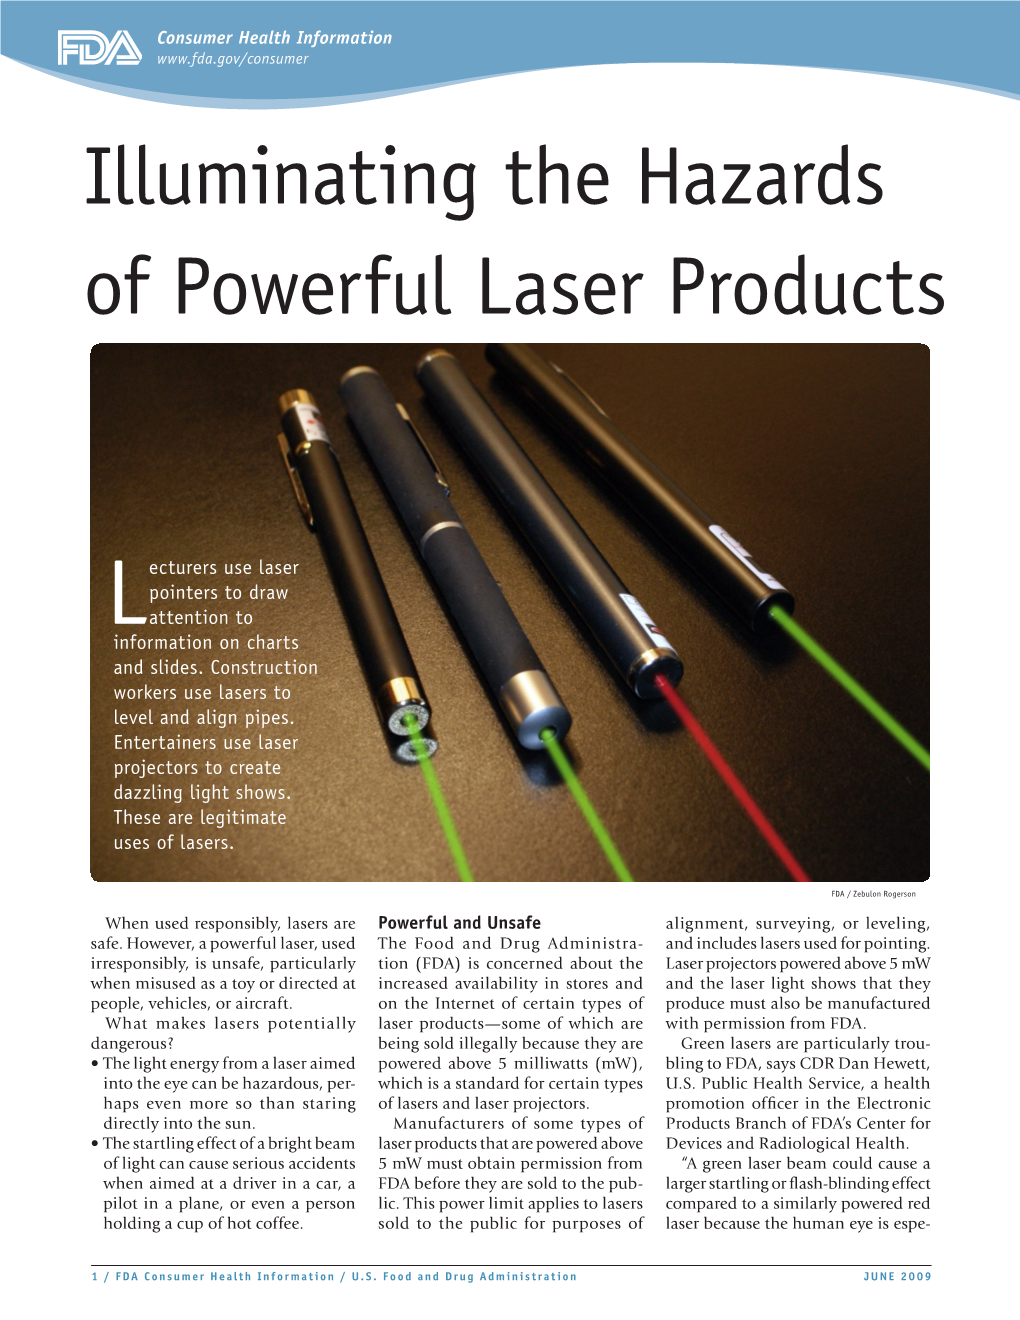 Illuminating the Hazards of Powerful Laser Products